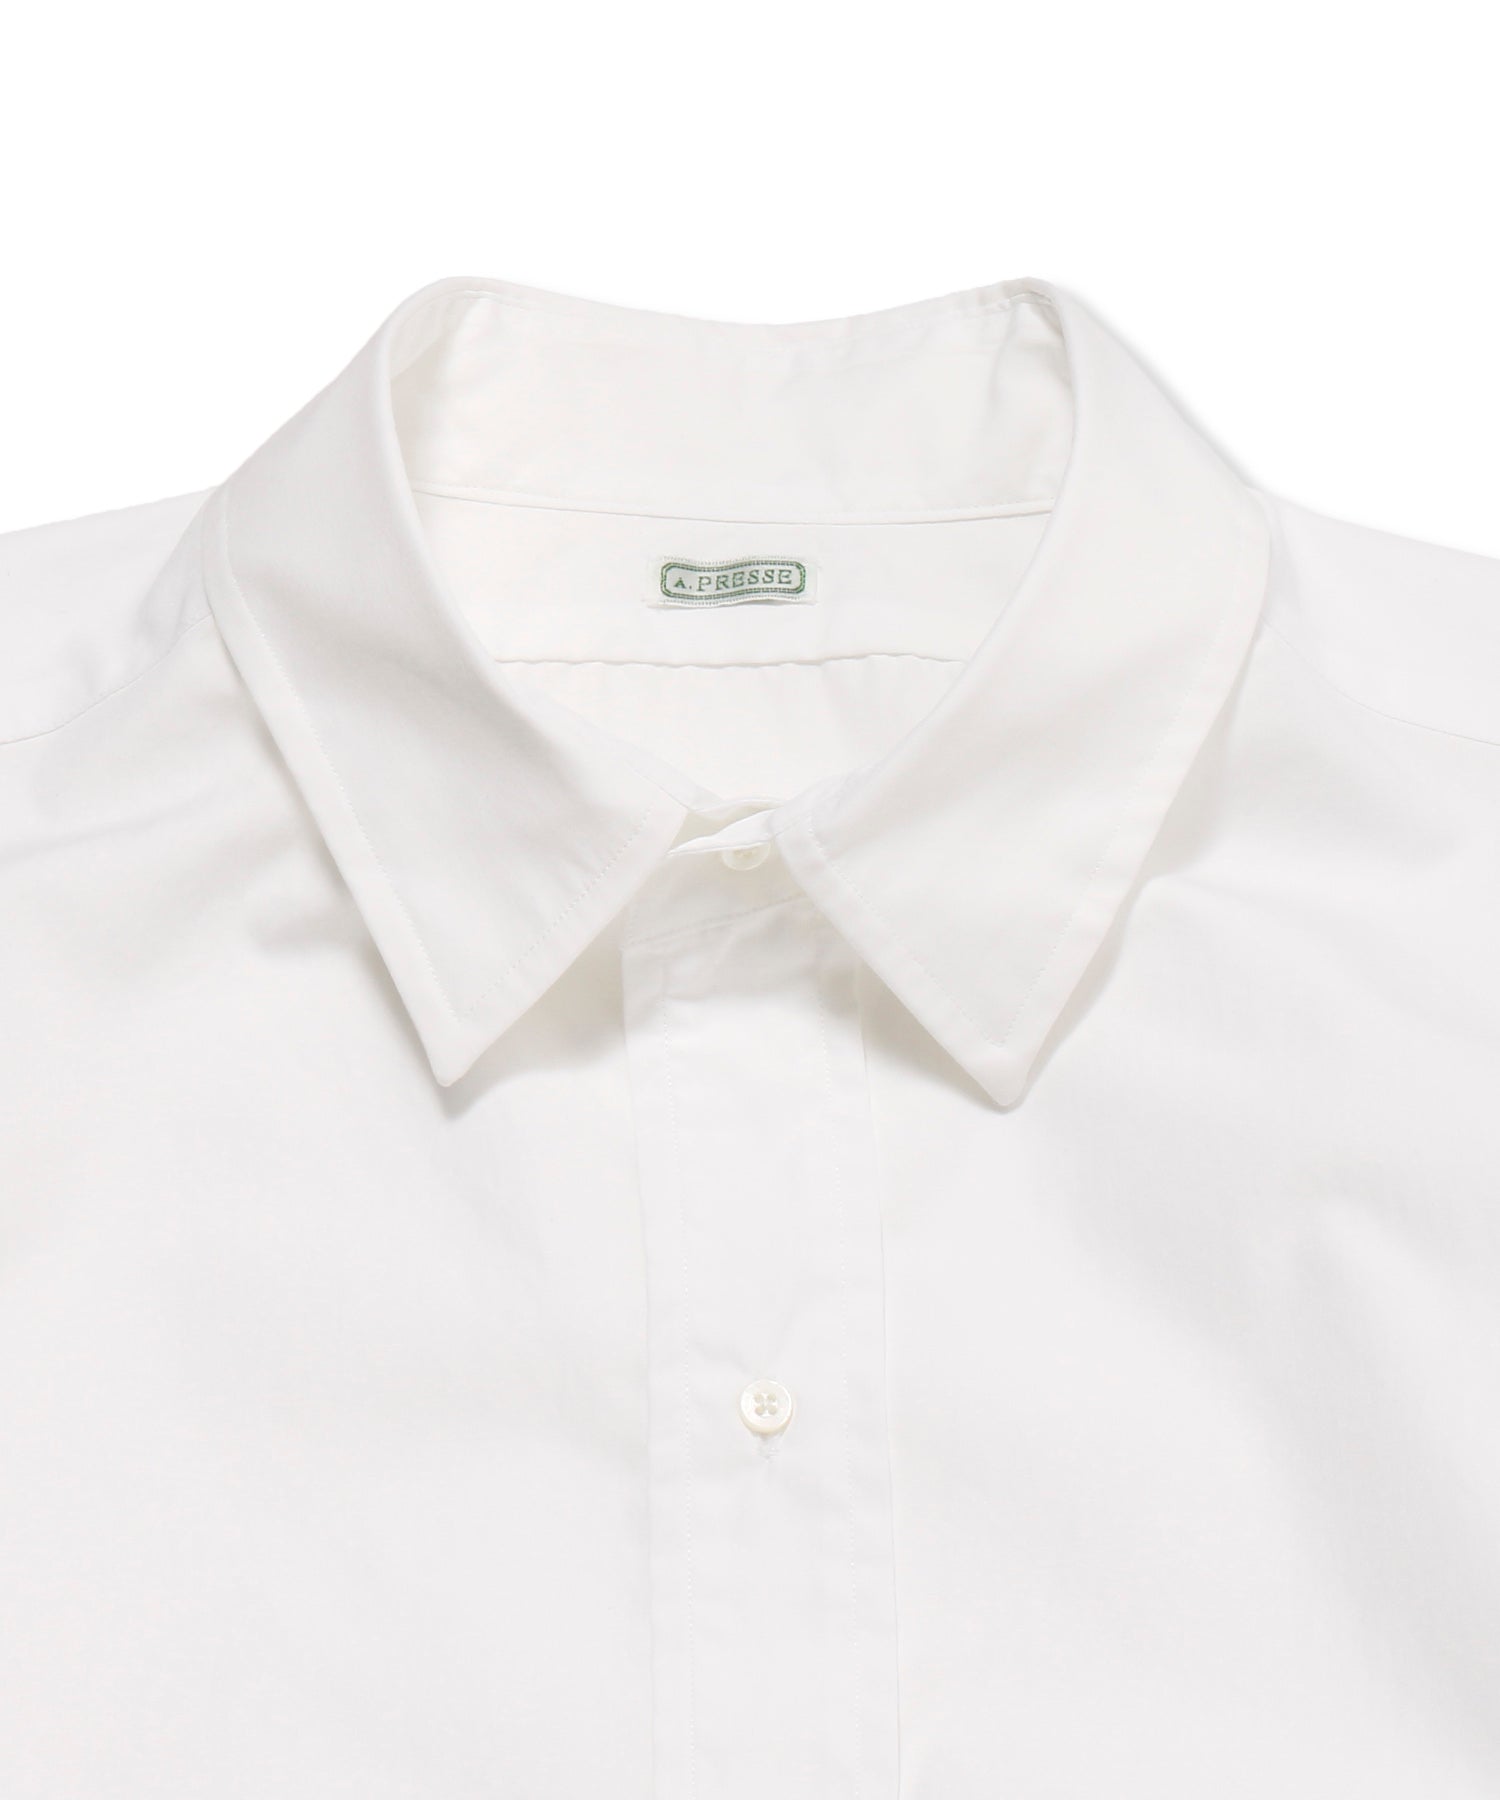 Regular Collar Shirt - A.PRESSE (アプレッセ) - tops (トップス 